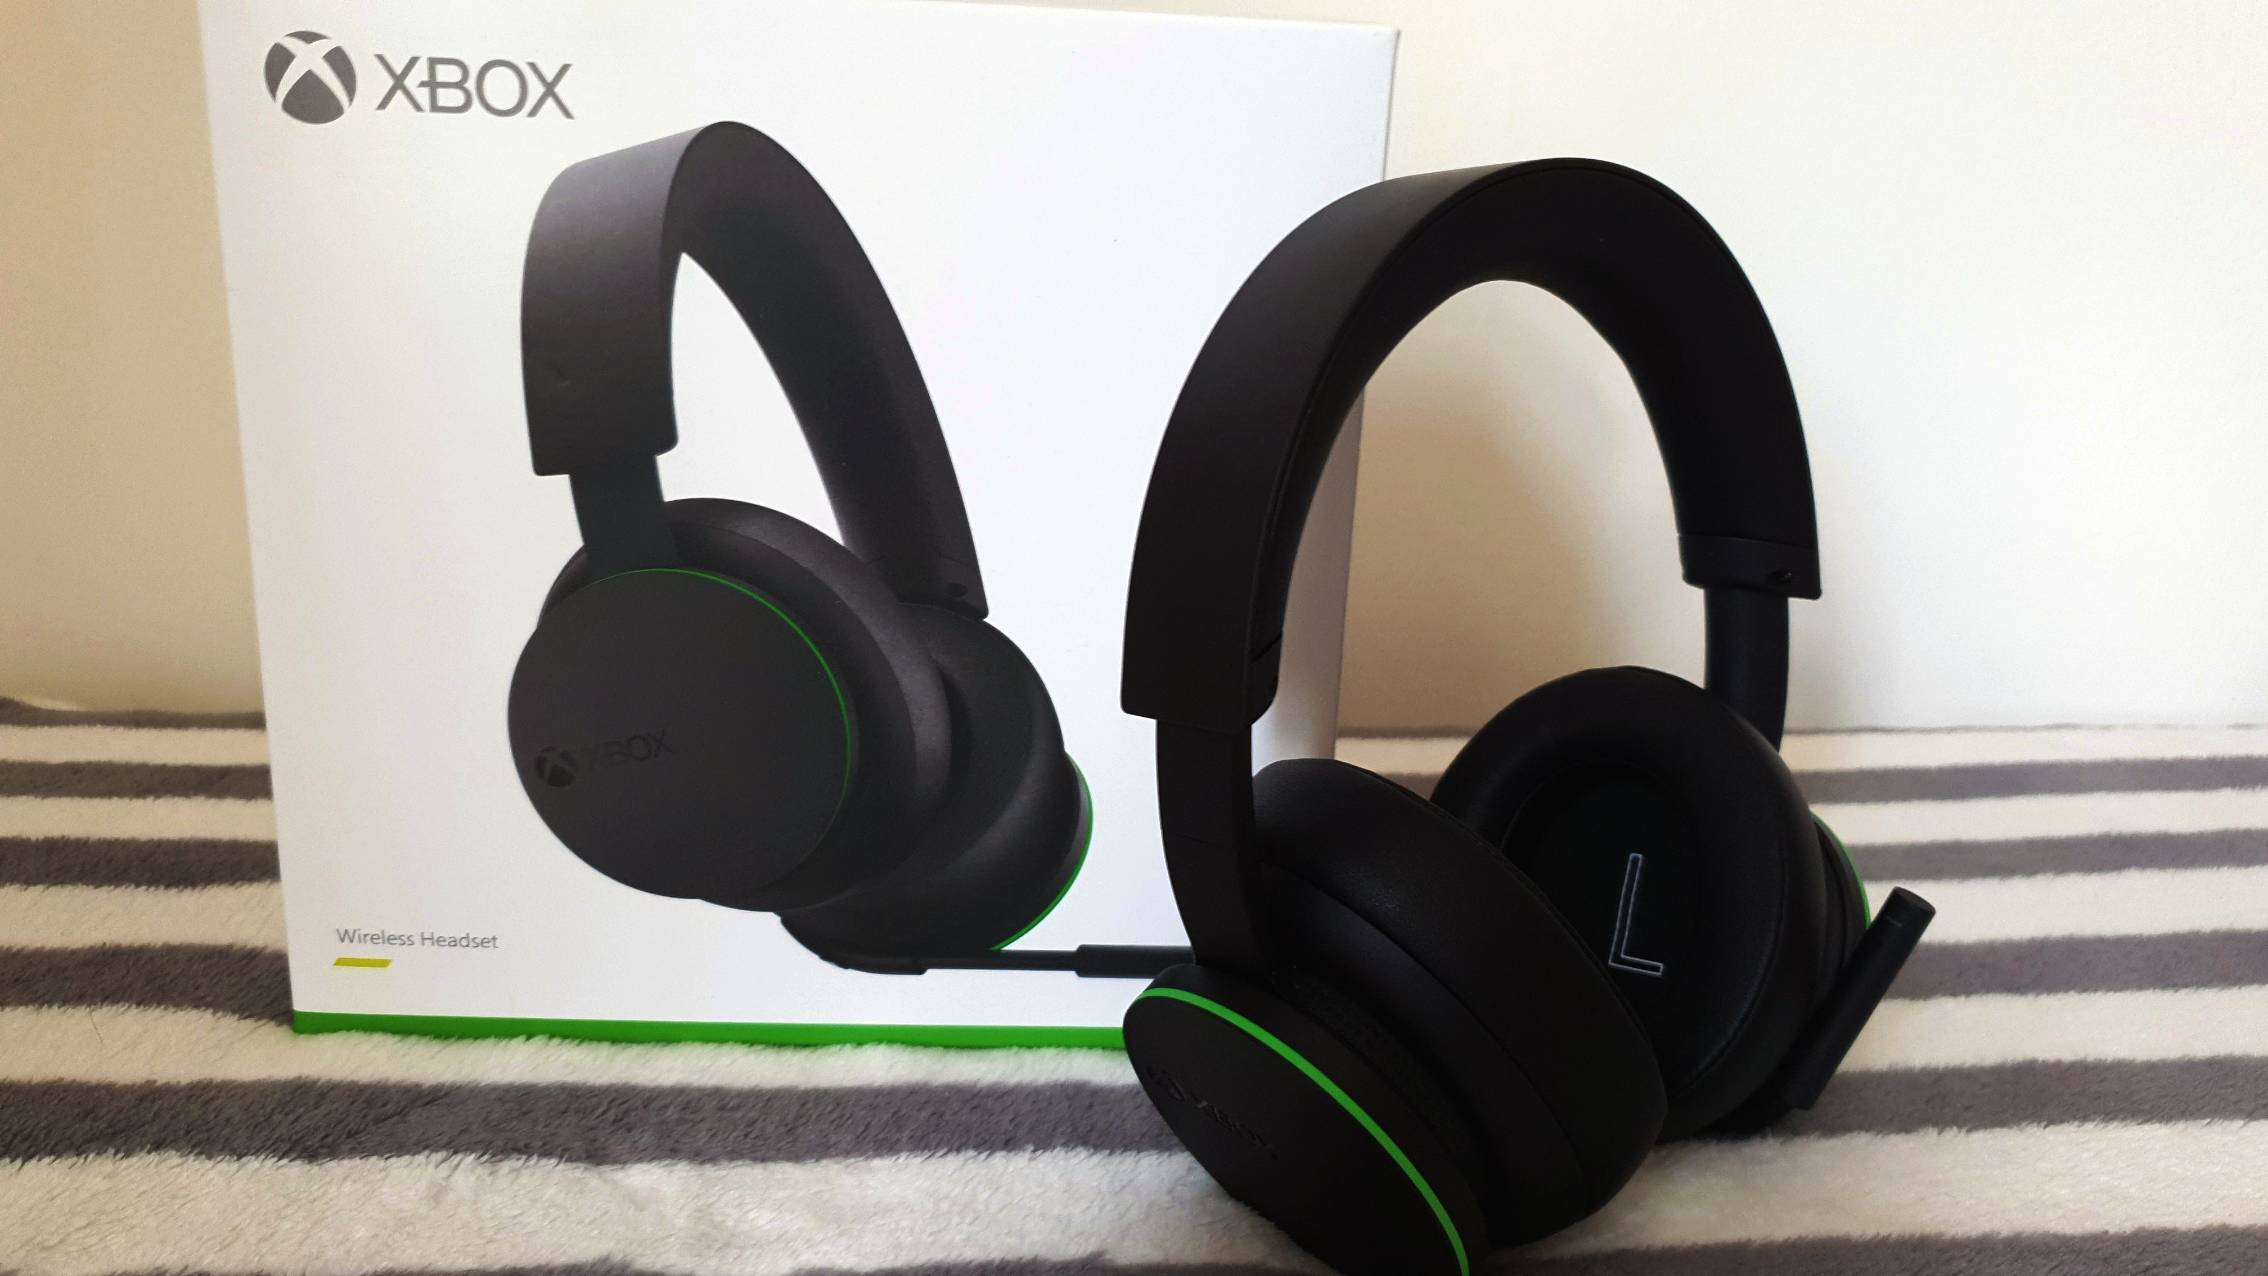 Aas Doe mee Analist Xbox Wireless Headset review | TechRadar